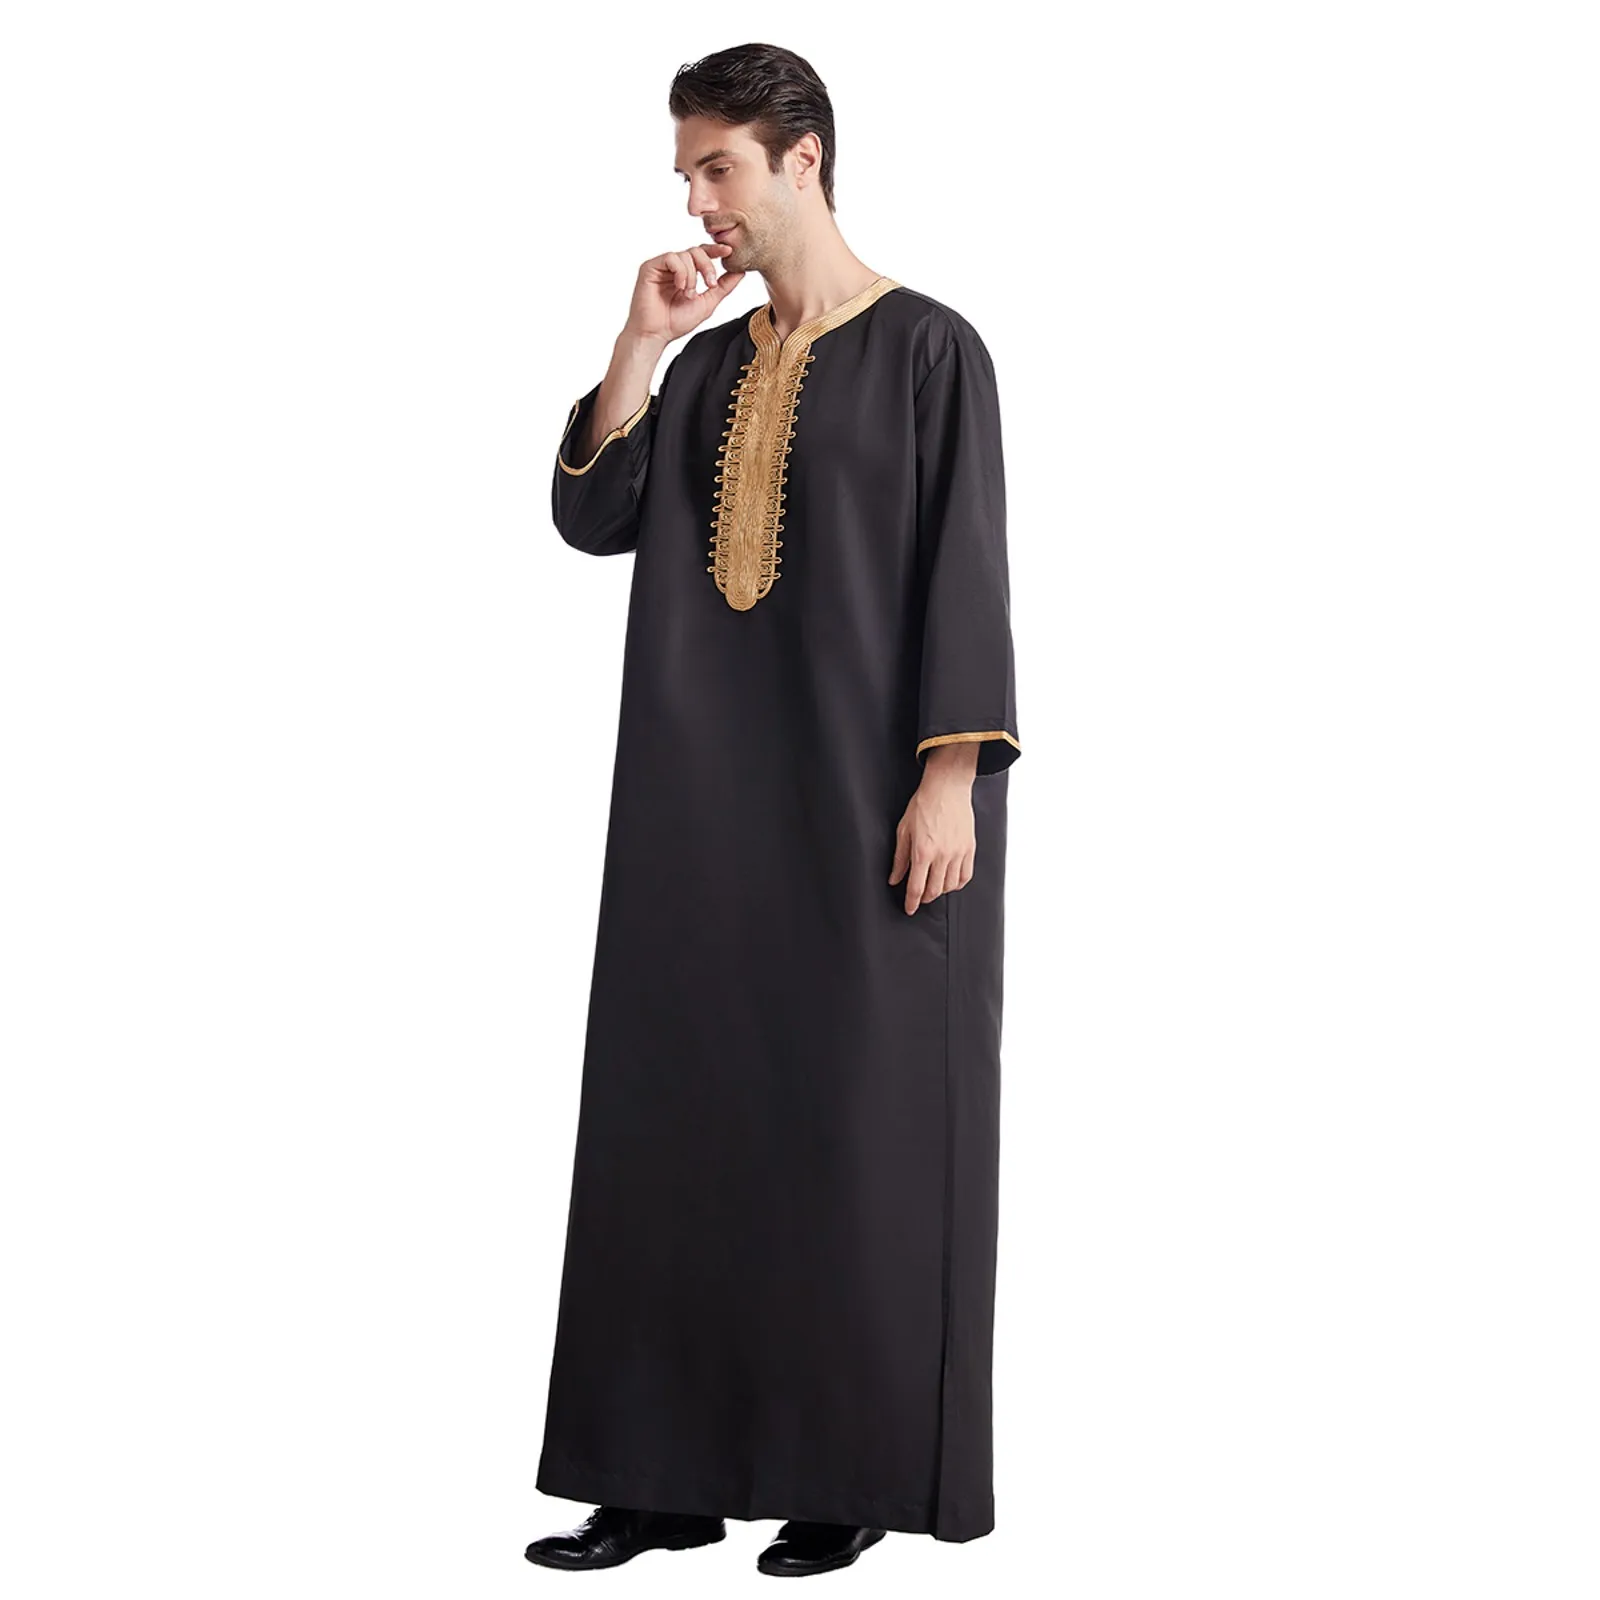 

Man Abaya Muslim Dress Pakistan Islam Clothing Abayas Robe Saudi Arabia Kleding Mannen Kaftan Oman Qamis Musulman De Mode Homme